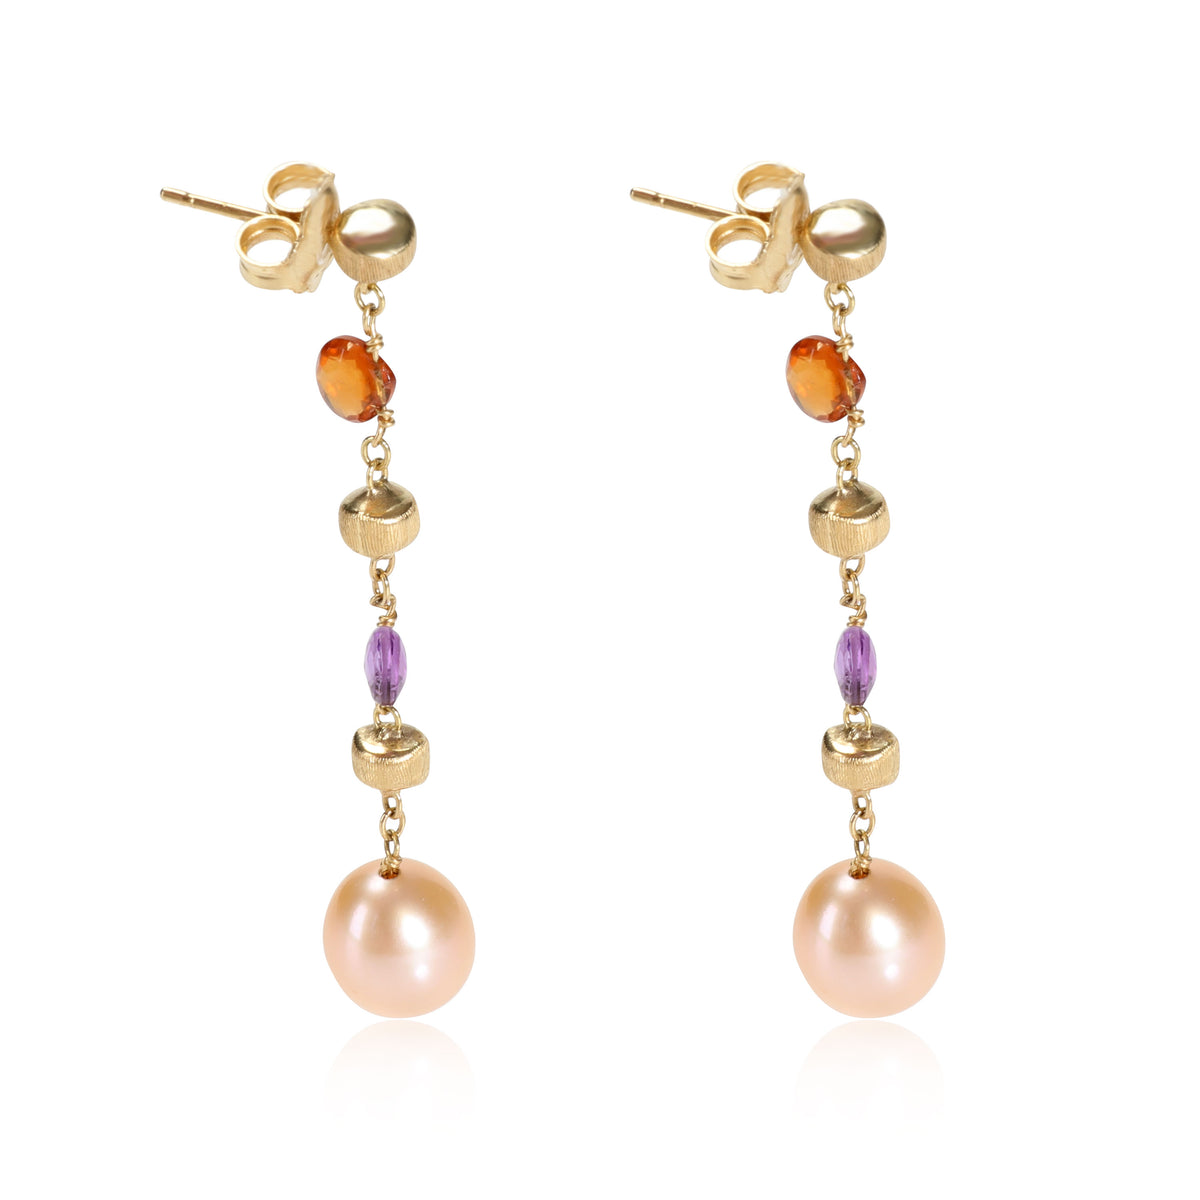 Marco Bicego Pearl & Gemstone Drop Earring in 18k Yellow Gold